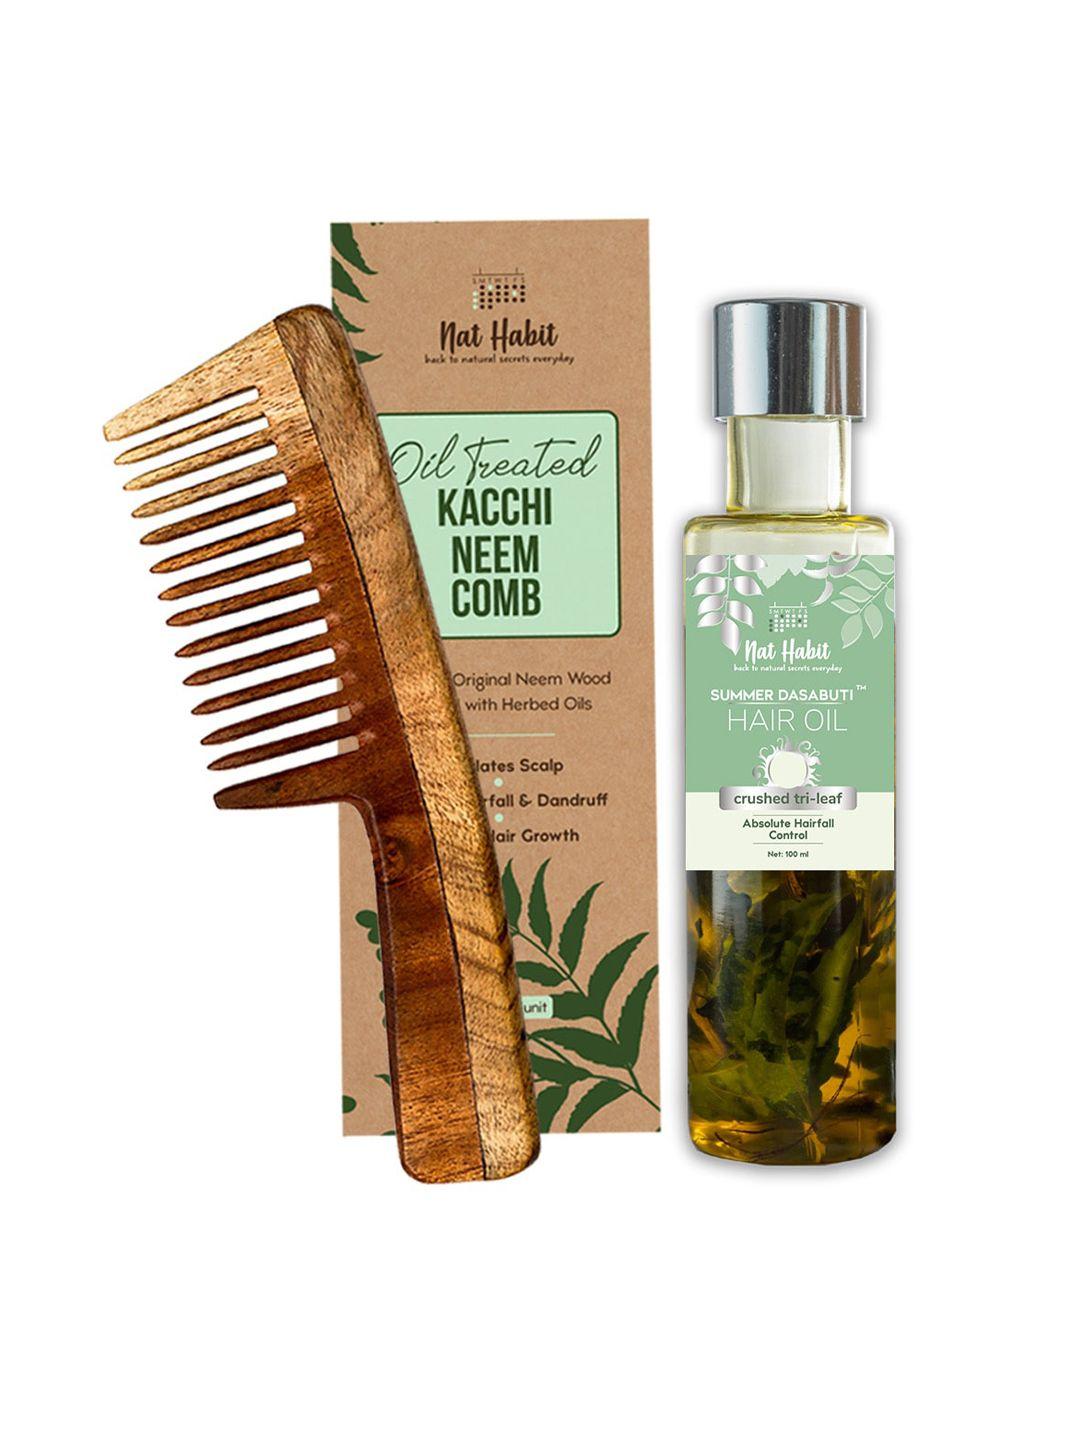 nat-habit-set-of-oil-treated-neem-comb-&-summer-dasabuti-crushed-tri-leaf-hair-oil-(100ml)